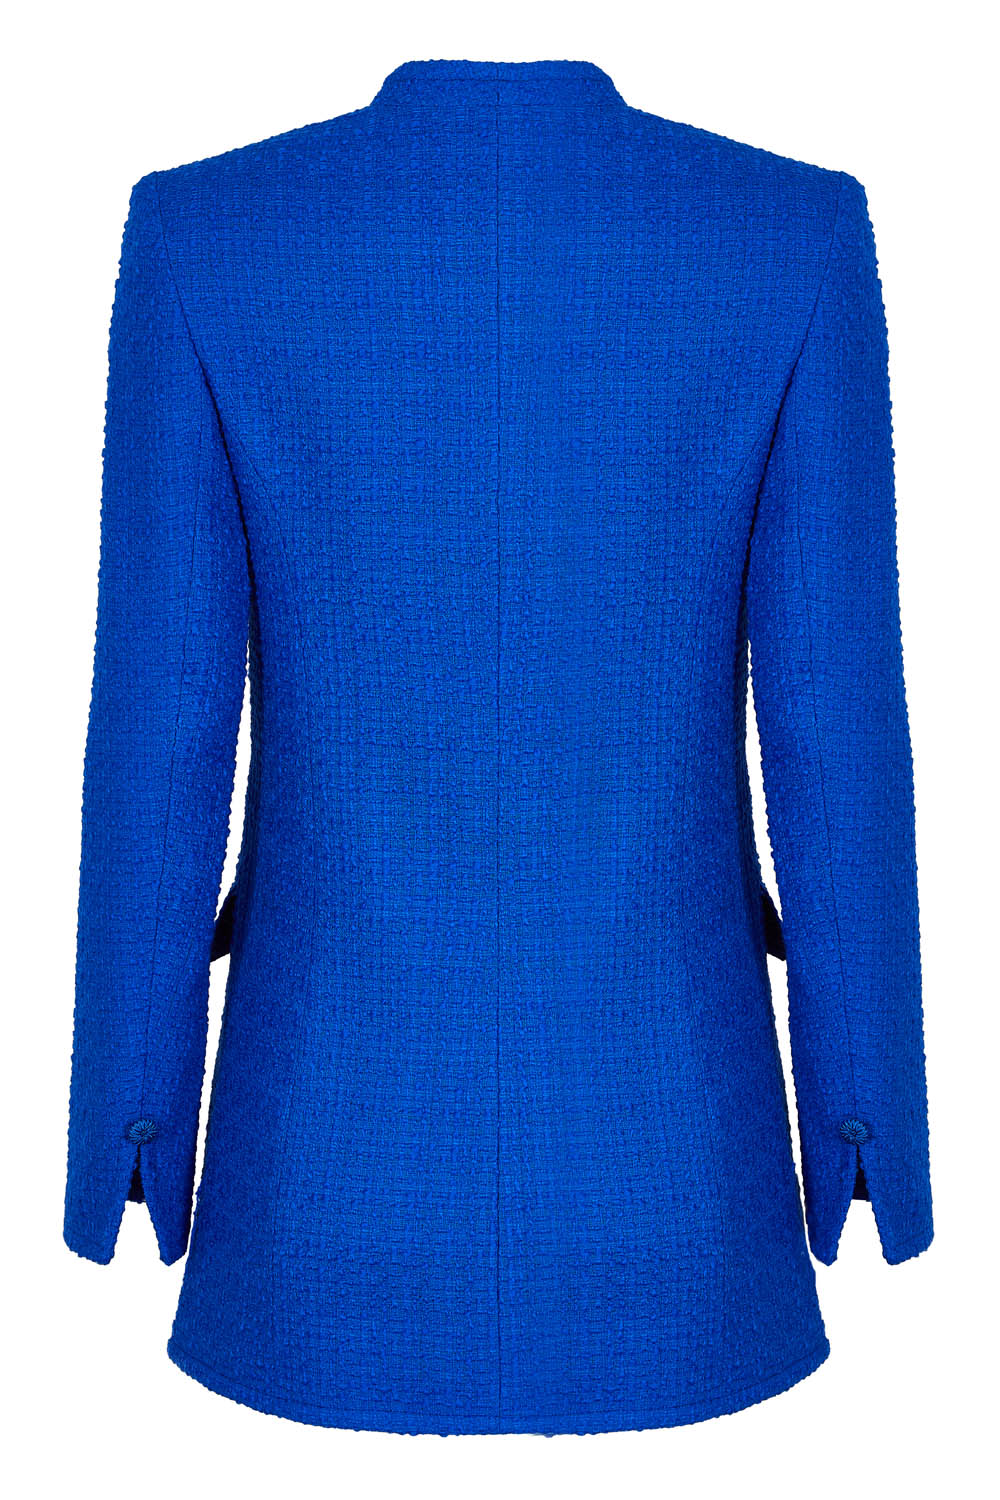 Royal Blue Tweed Jacket - Evelyn